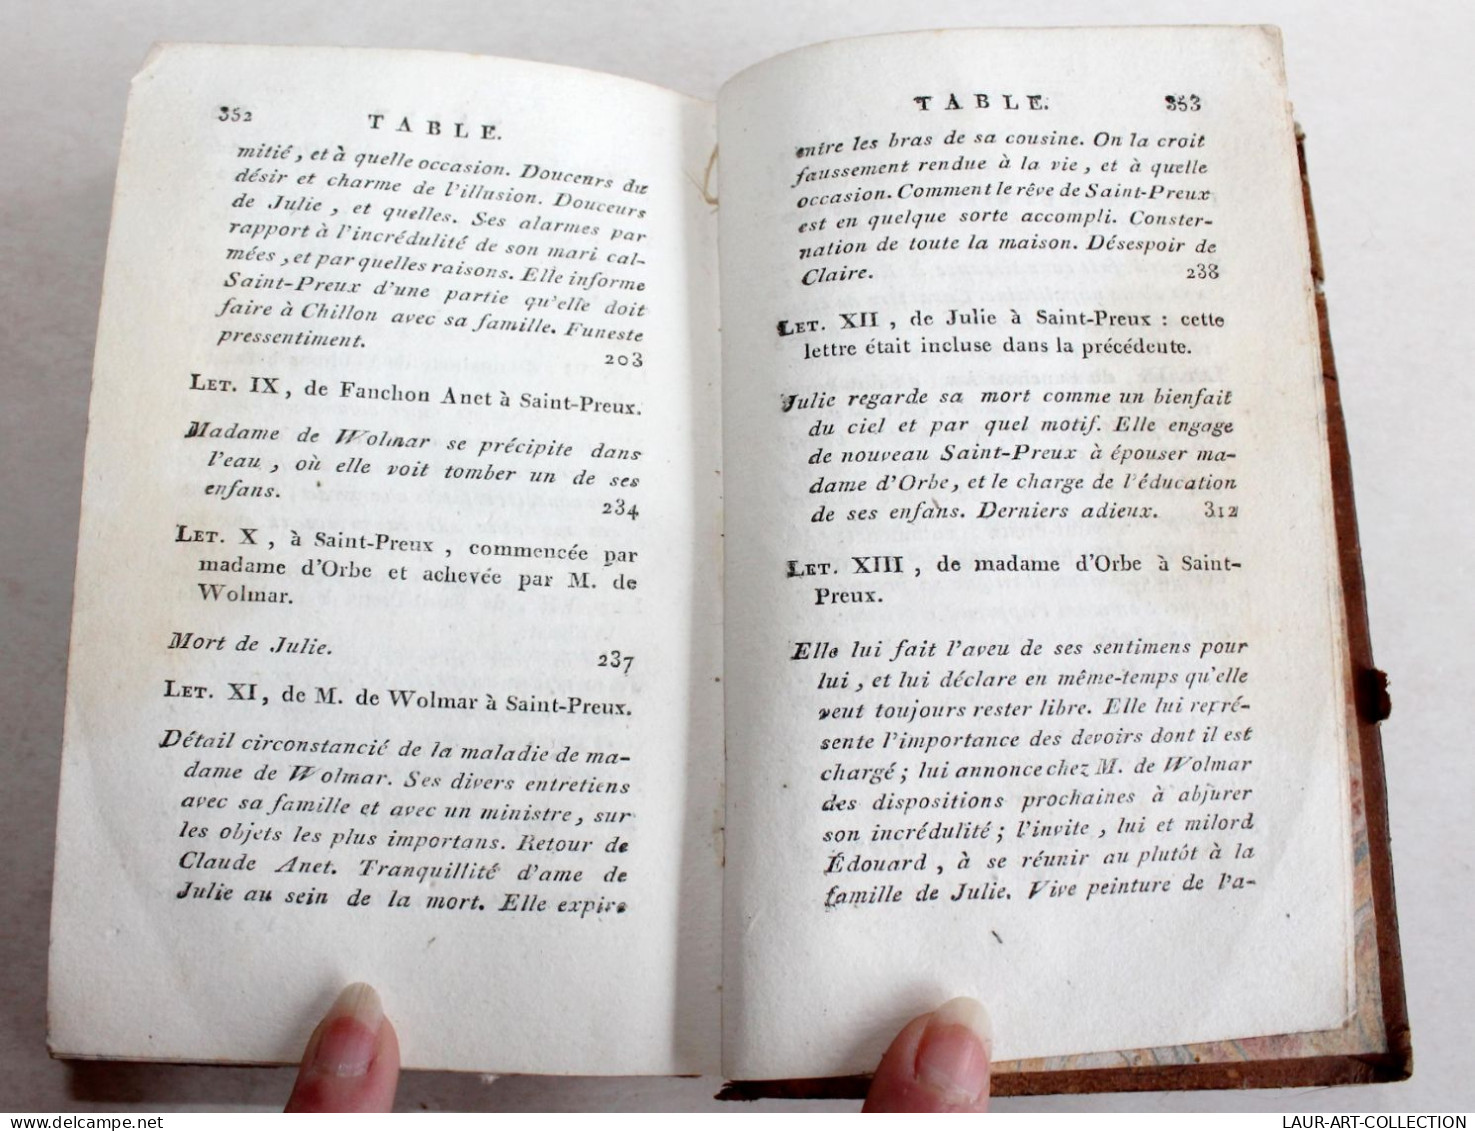 OEUVRES COMPLETES DE JJ. ROUSSEAU TOME N°6, HELOISE TOME 4 NOUVELLE EDITION 1793 / LIVRE ANCIEN XVIIIe SIECLE (1303.127)